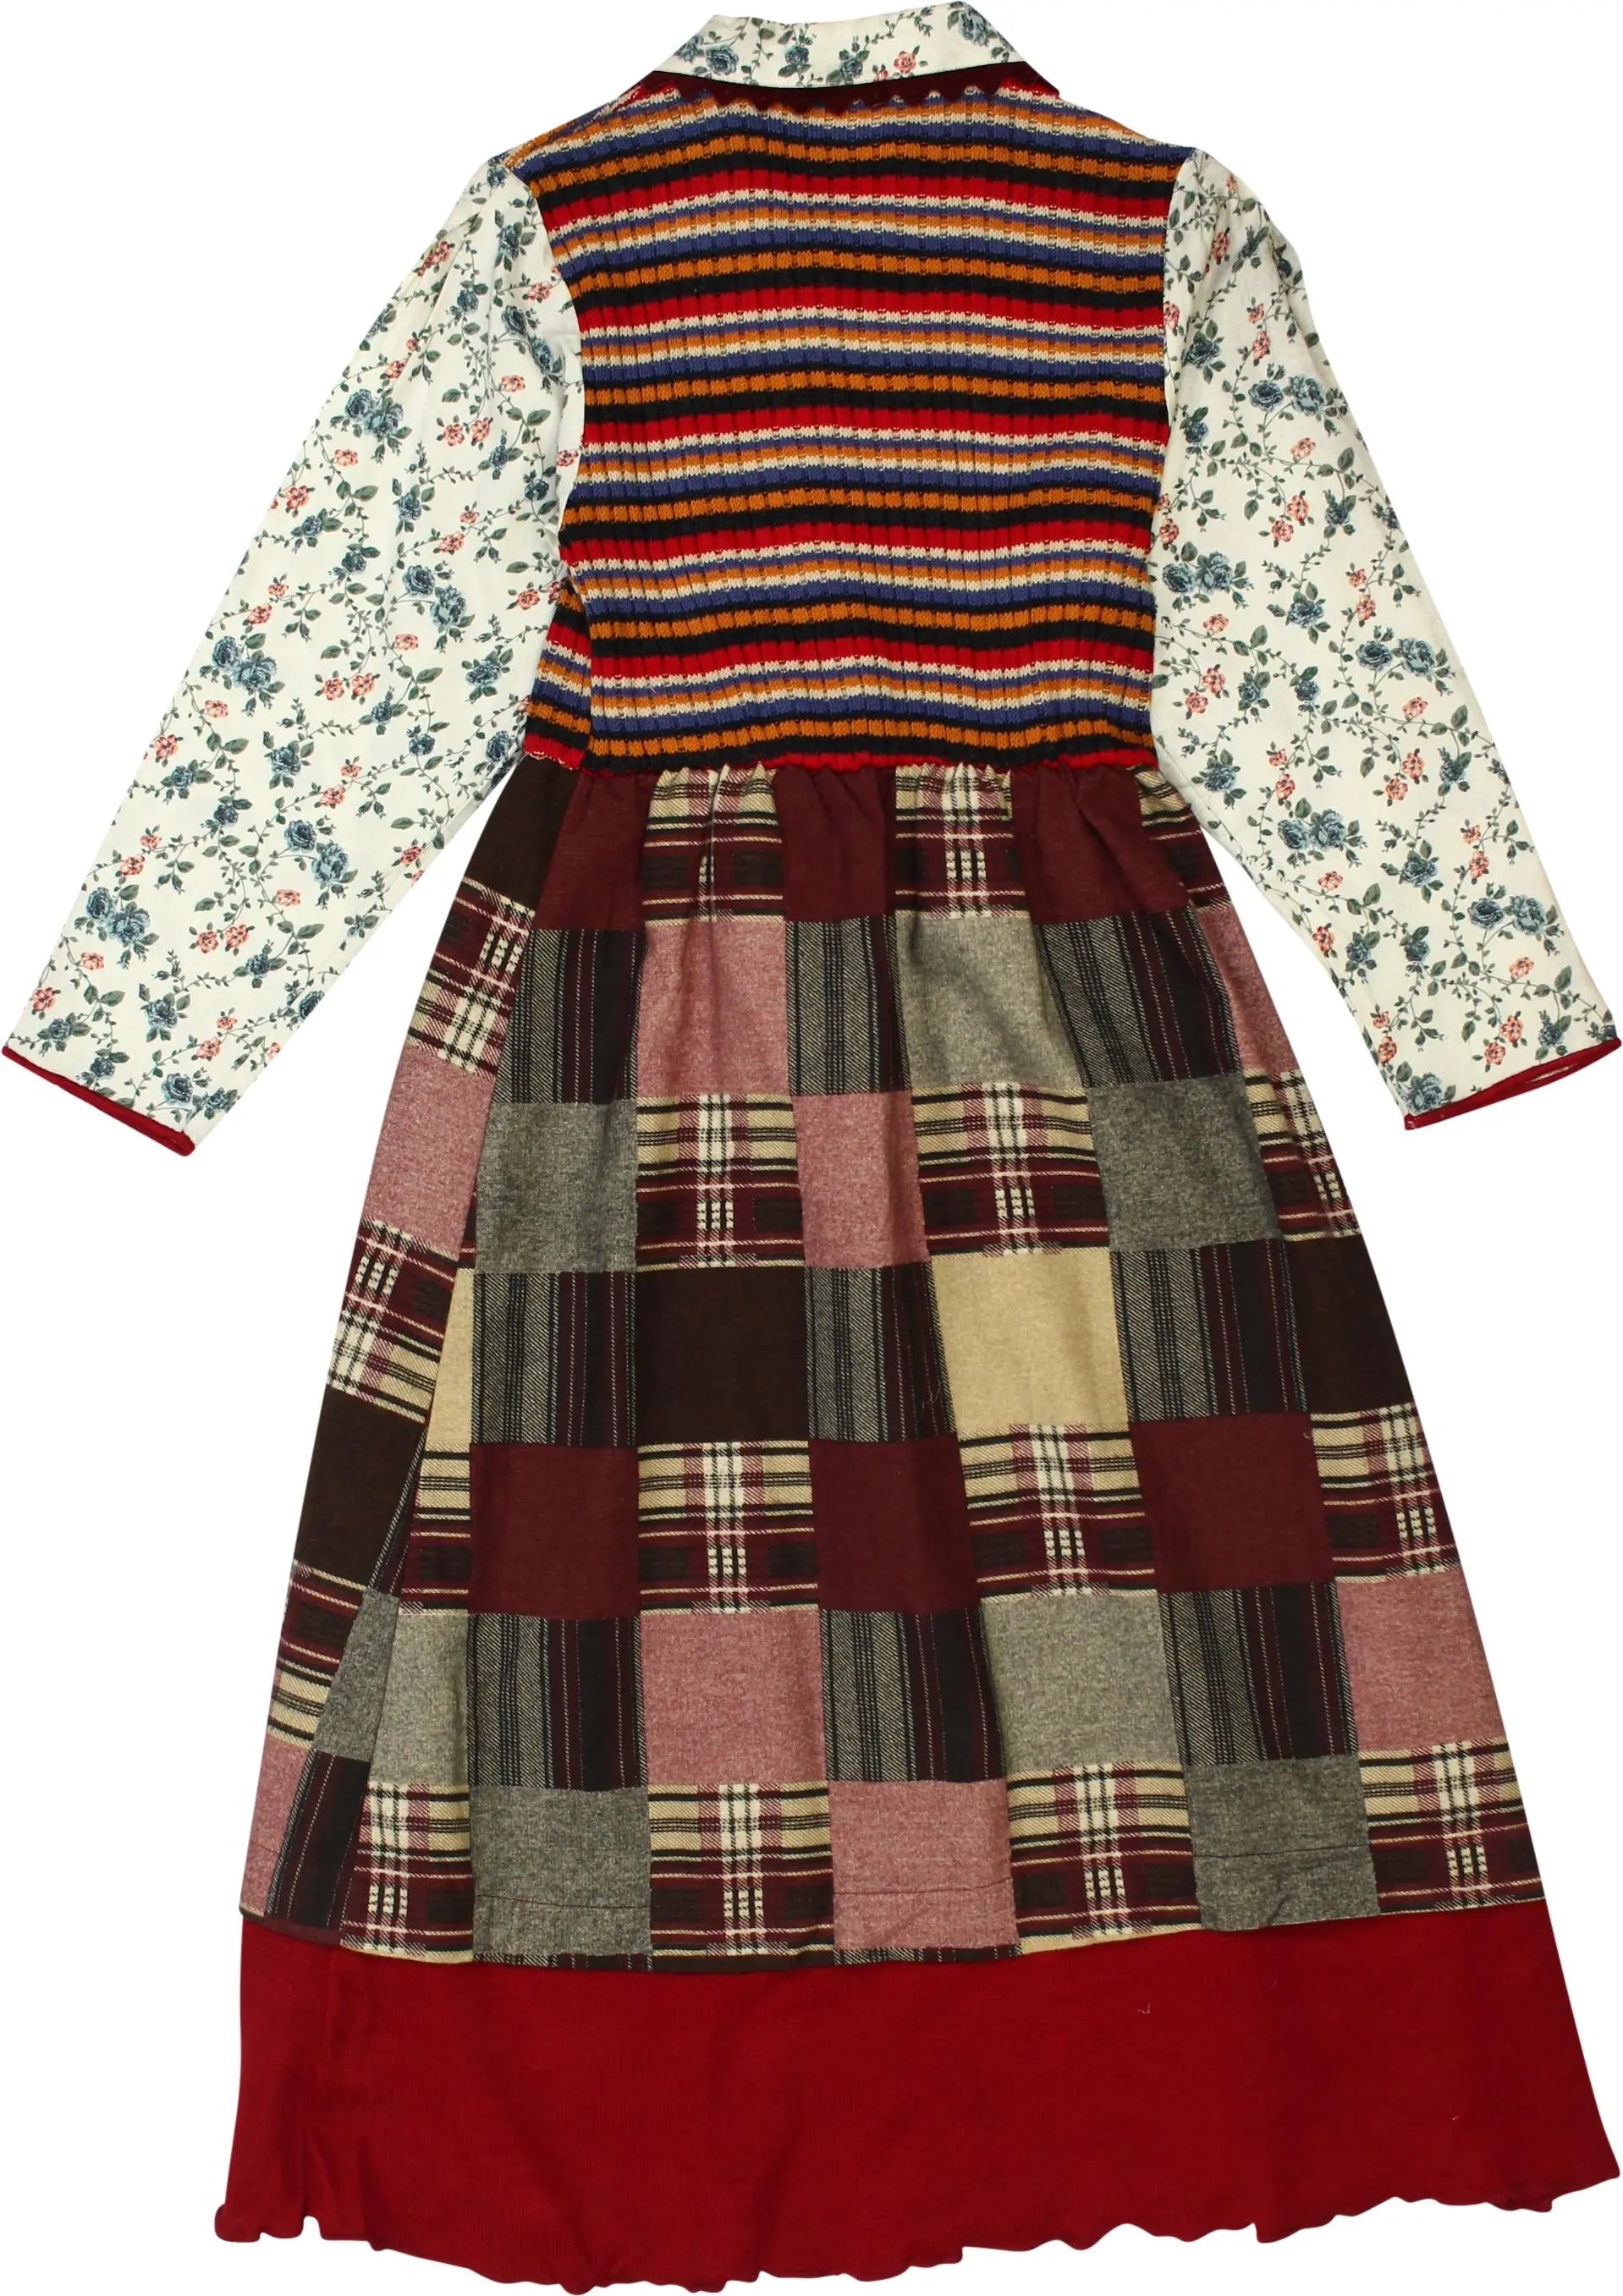 Salor - Colourful Vintage Dress- ThriftTale.com - Vintage and second handclothing